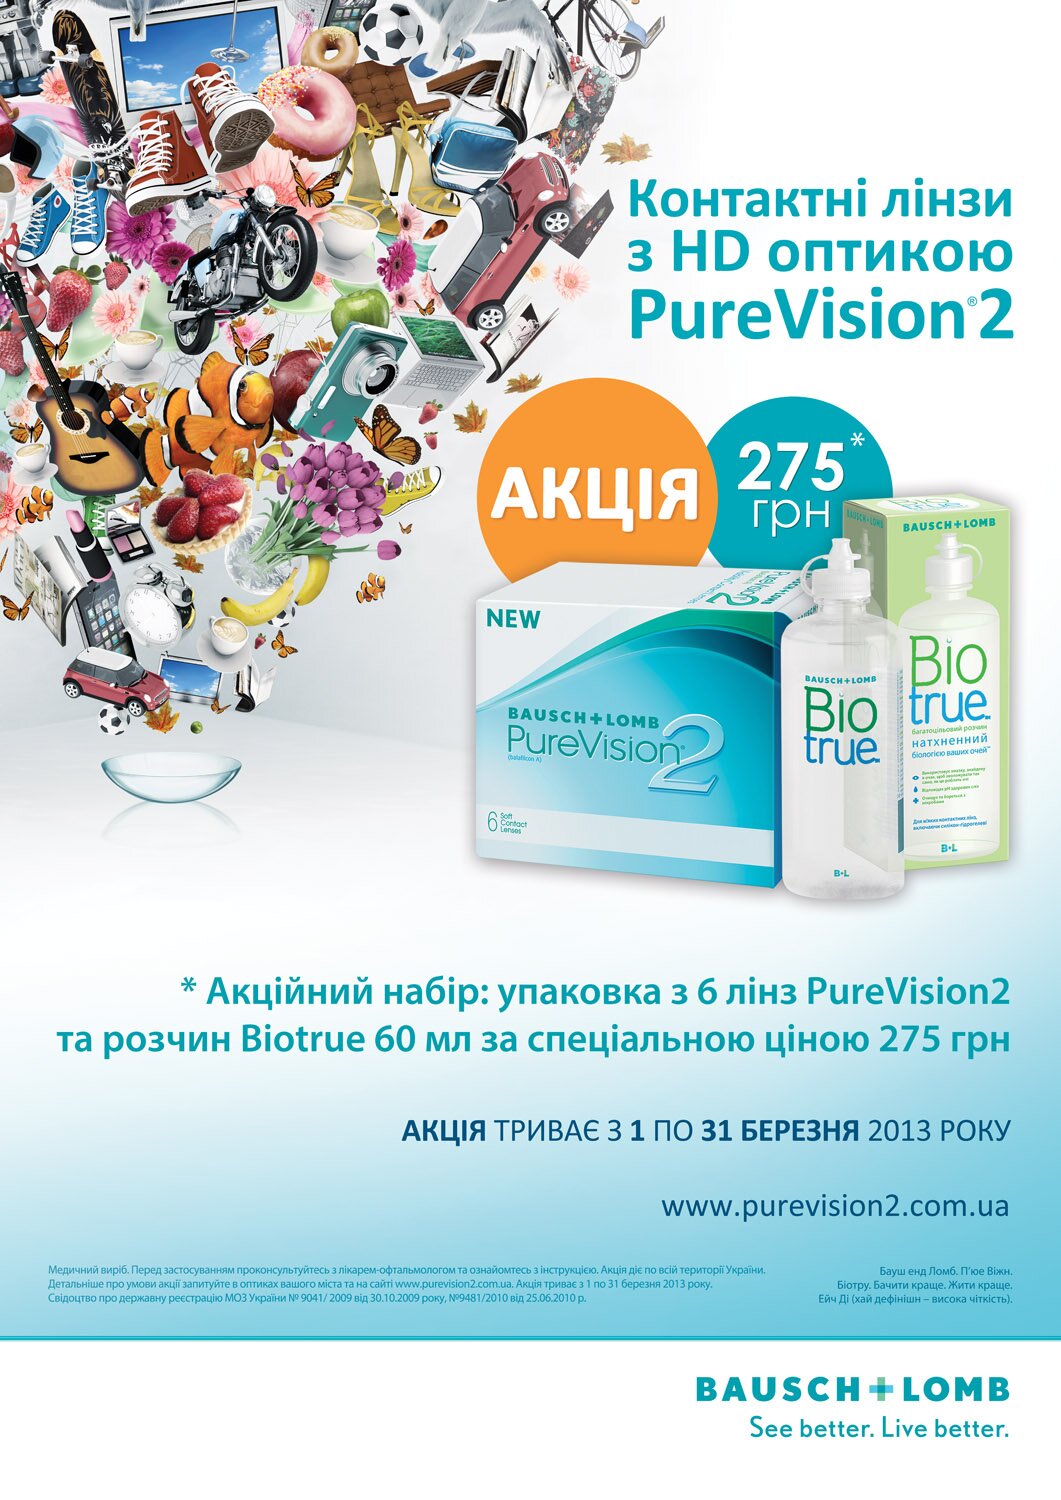  PureVision2 HD 6 шт. + Biotrue 60 мл. за 275 грн.